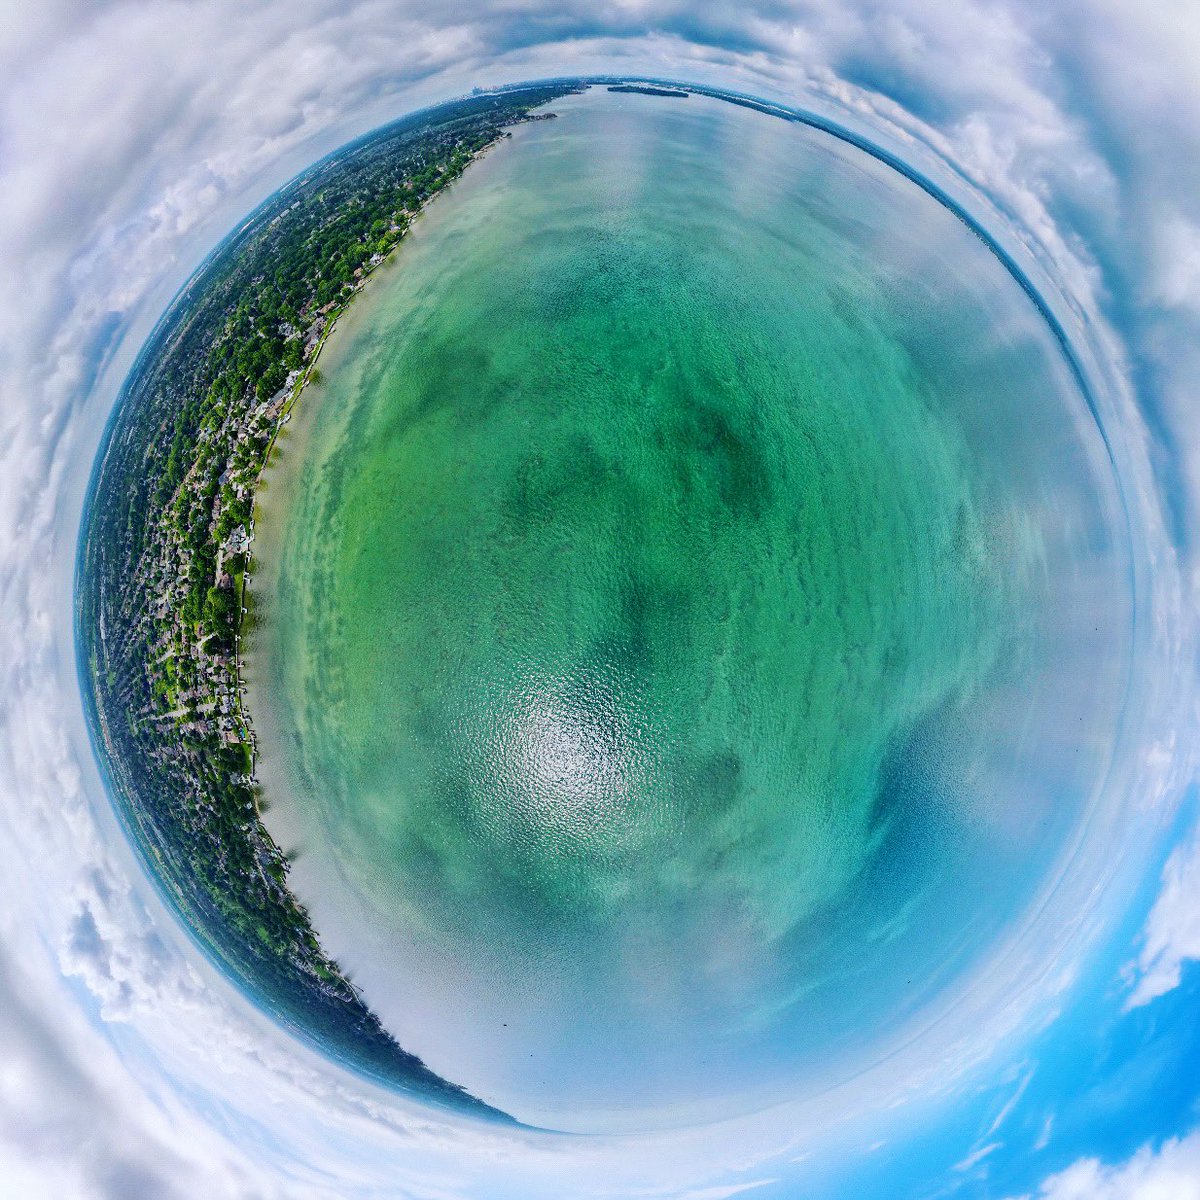 The Turquoise Waters of Lake St. Clair #drone #uav #uas #rpas #dji #mavicair2 #upyourgame #lake #lakestclair #turquoise #water #summer #morning #aerialphotography #sphere #pano #shotondji #tecumseh #ontario #canada #dronestagram #dronedesire #twenty4sevendrones #gameofdrones